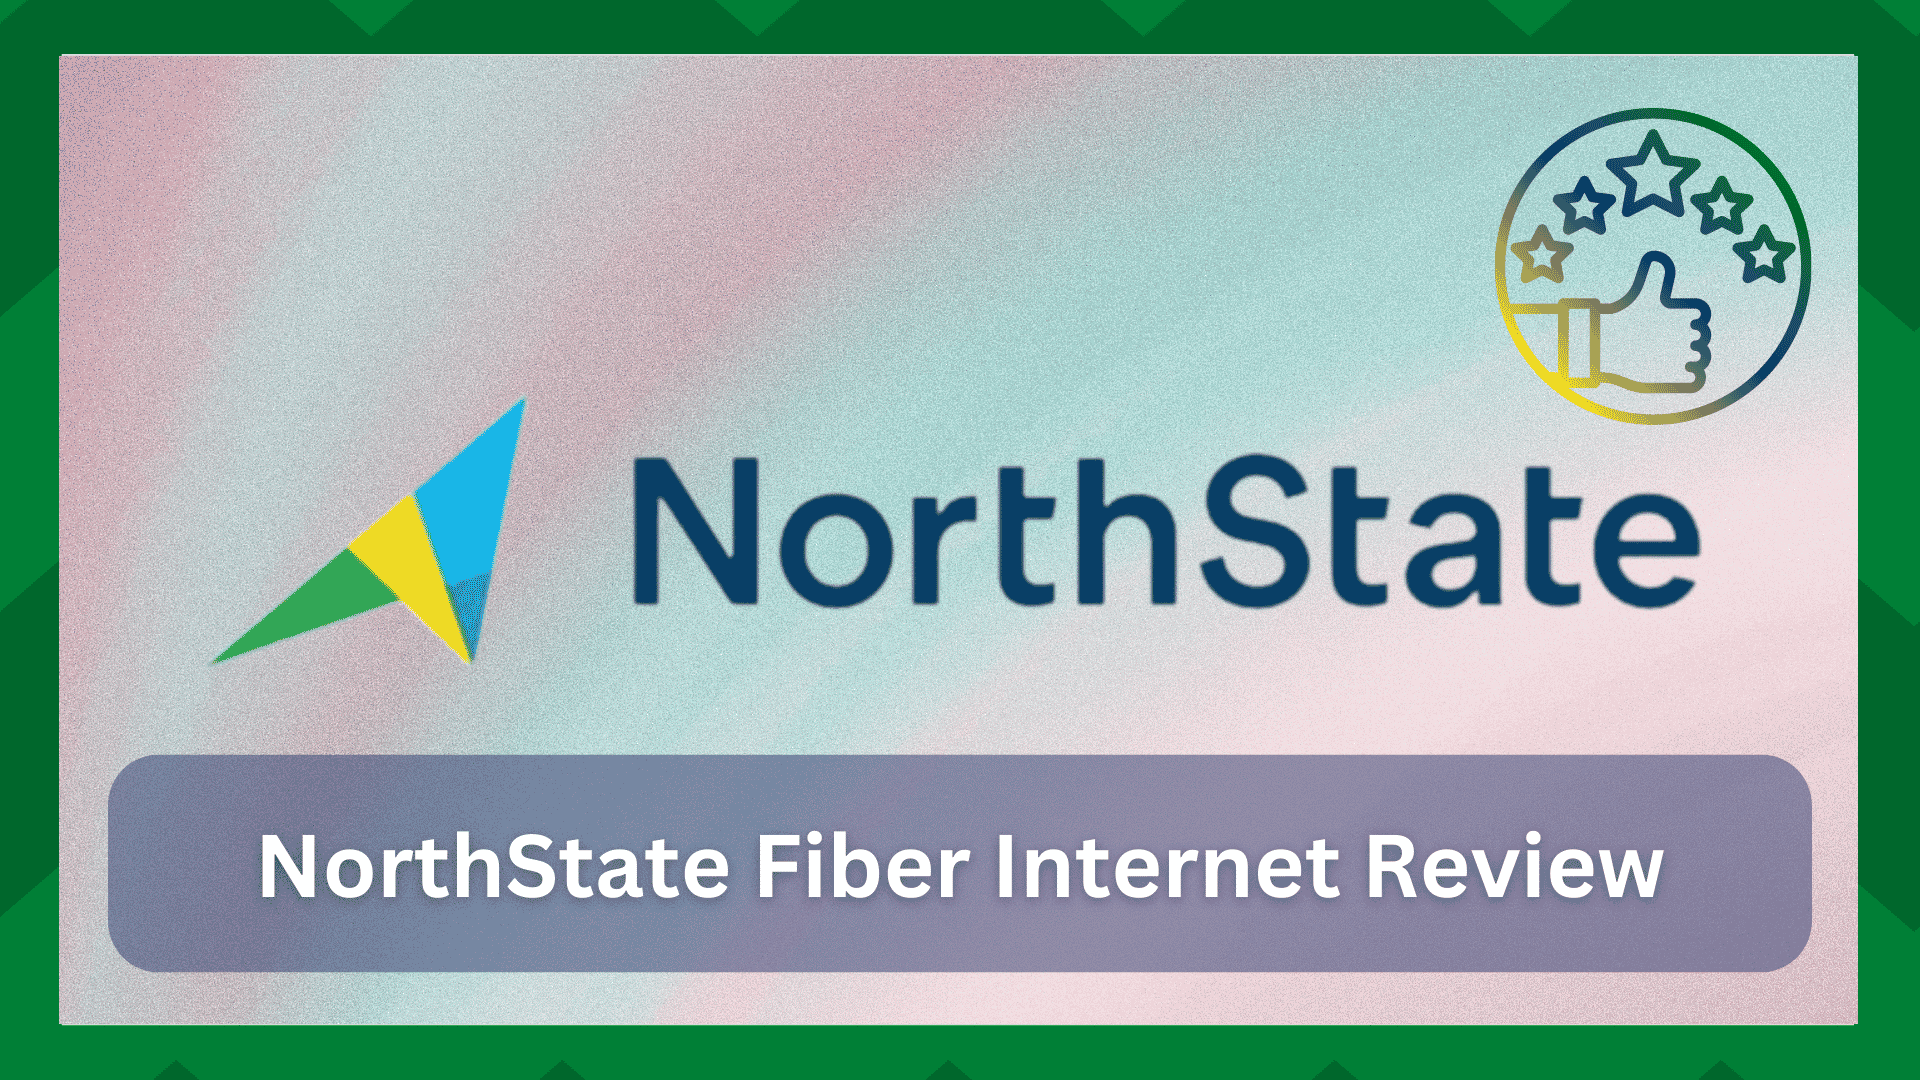 NorthState Fiber Internet Review (Moet je ervoor gaan?)